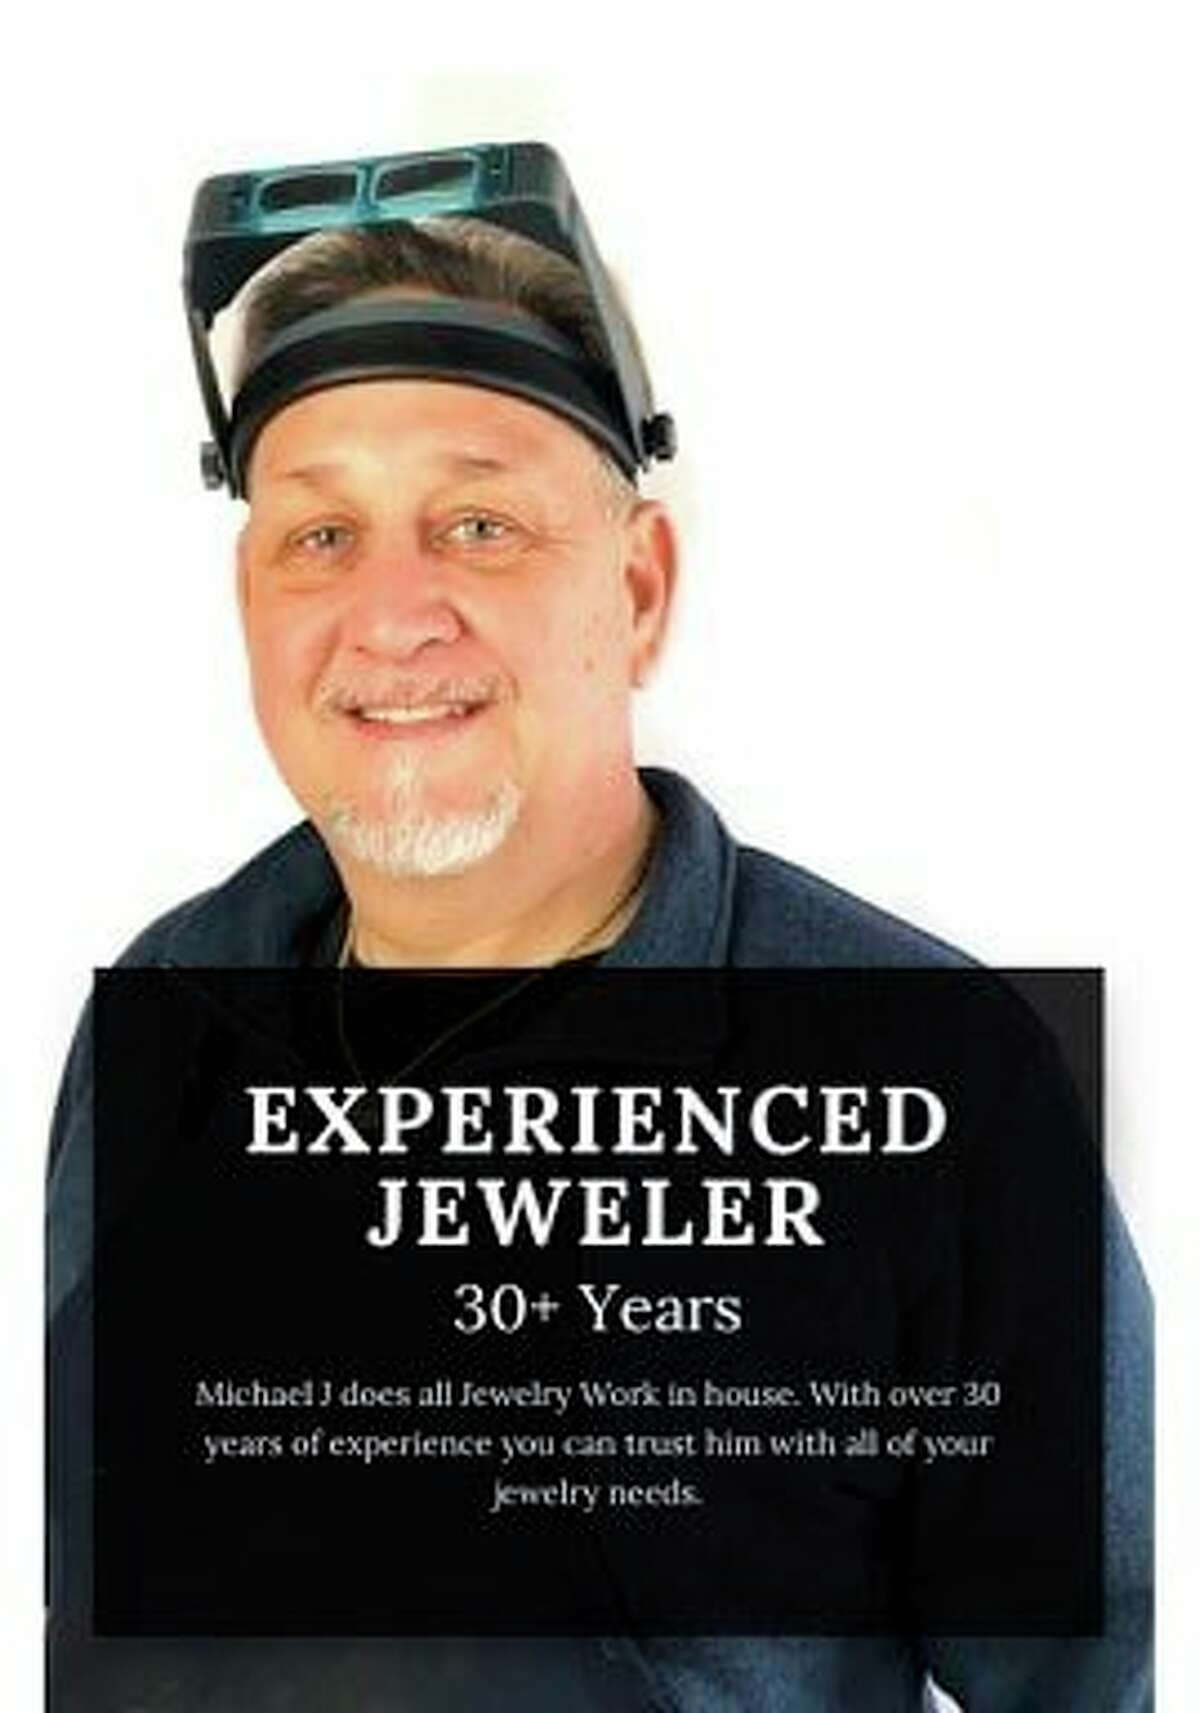 From hockey to jewelry, destiny led Michael J